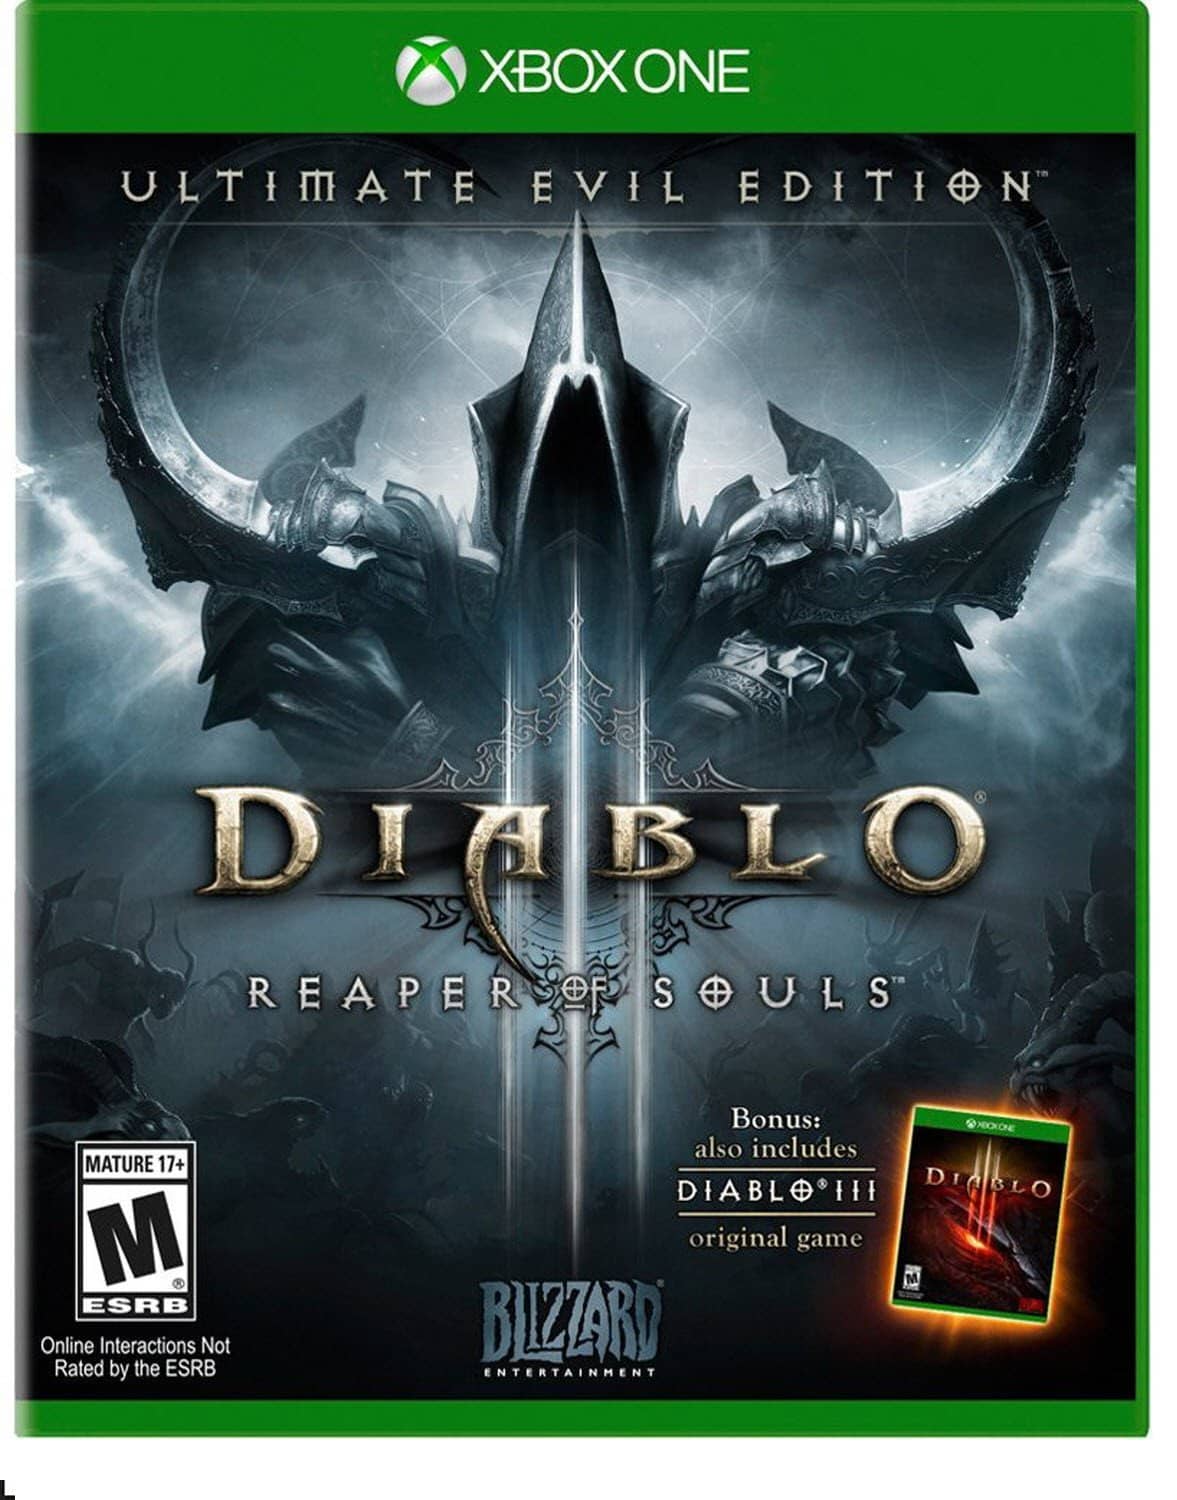 Diablo III: Ultimate Evil Edition - Xbox One